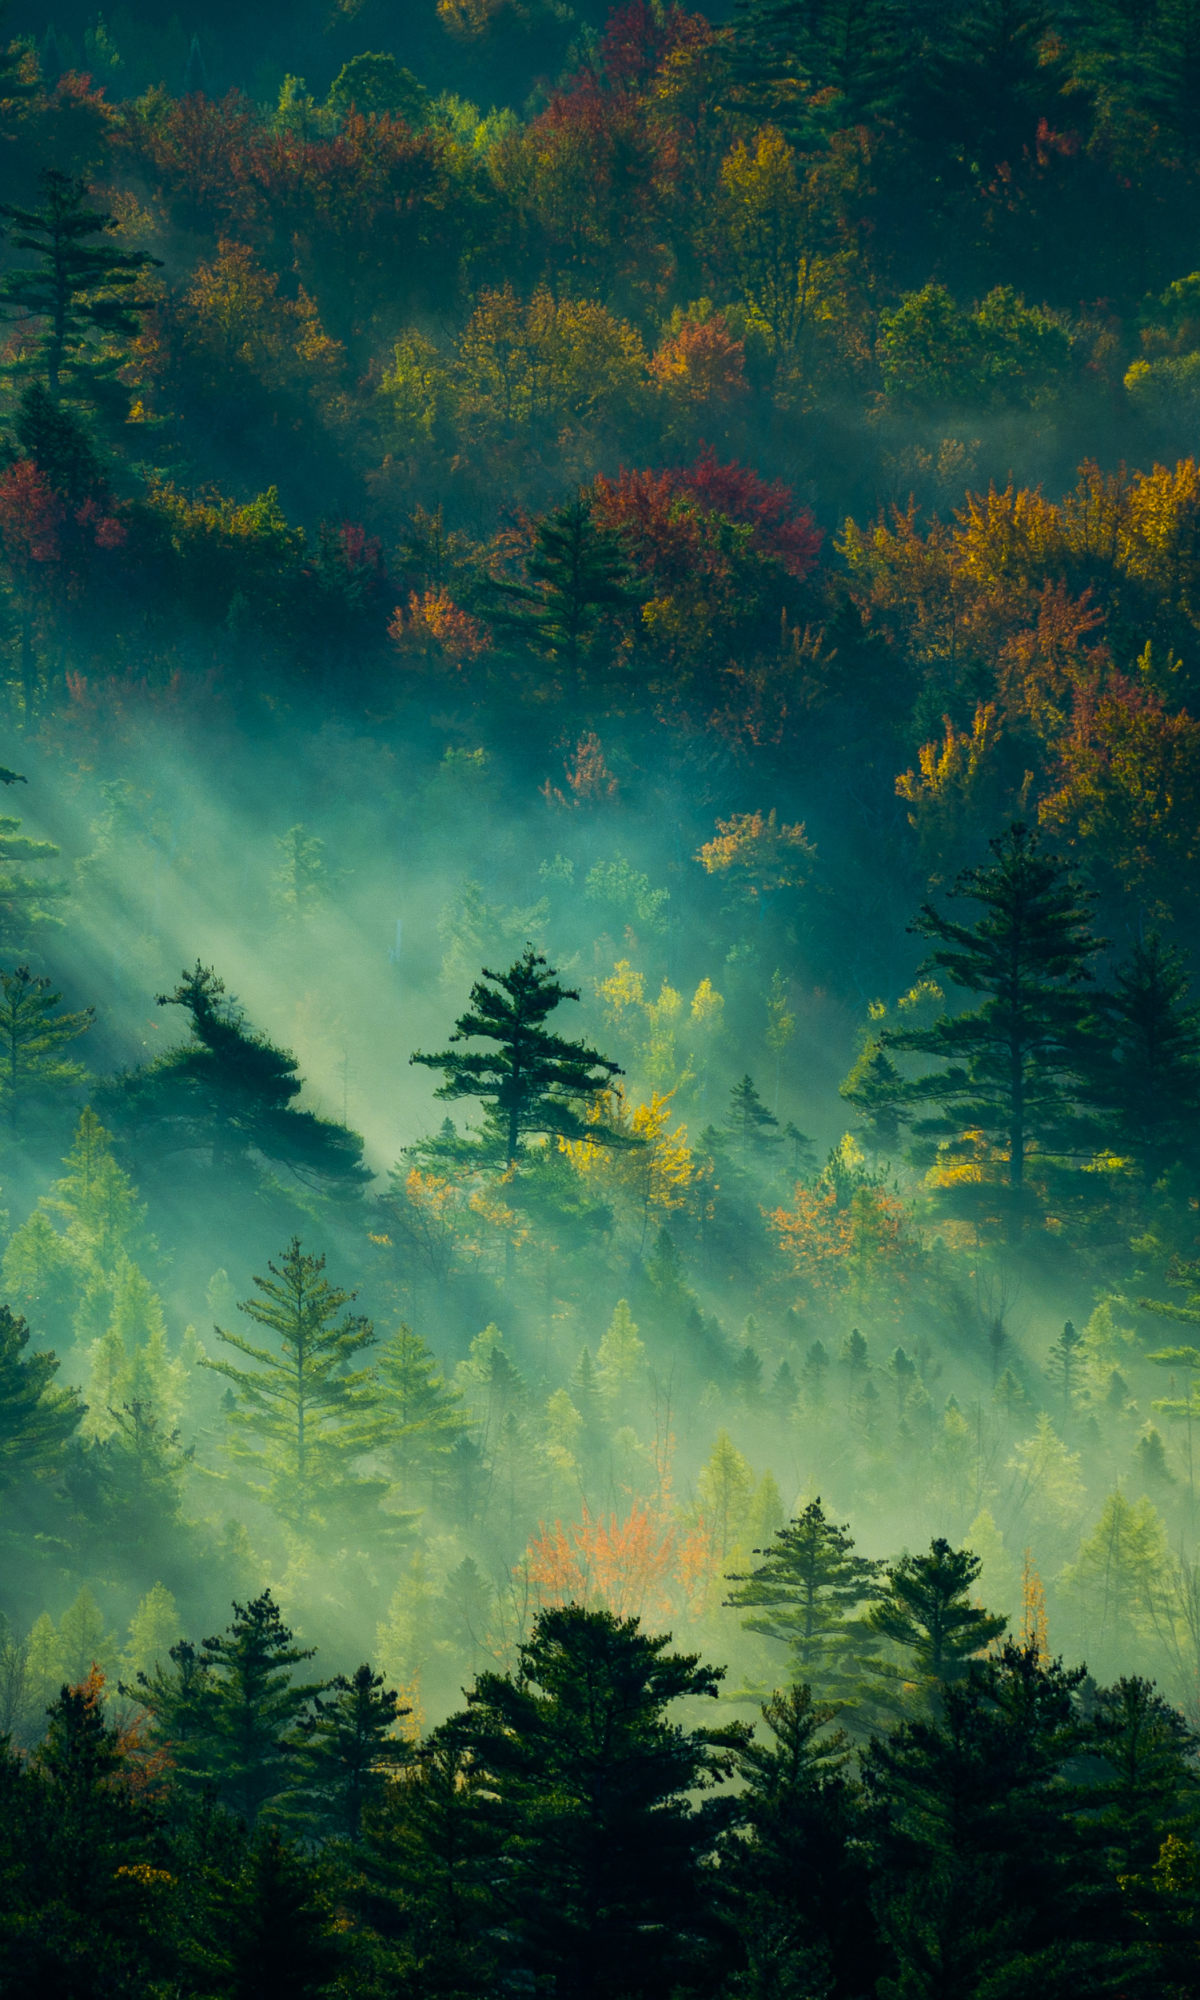 Fog in Jungle by Derek Kind